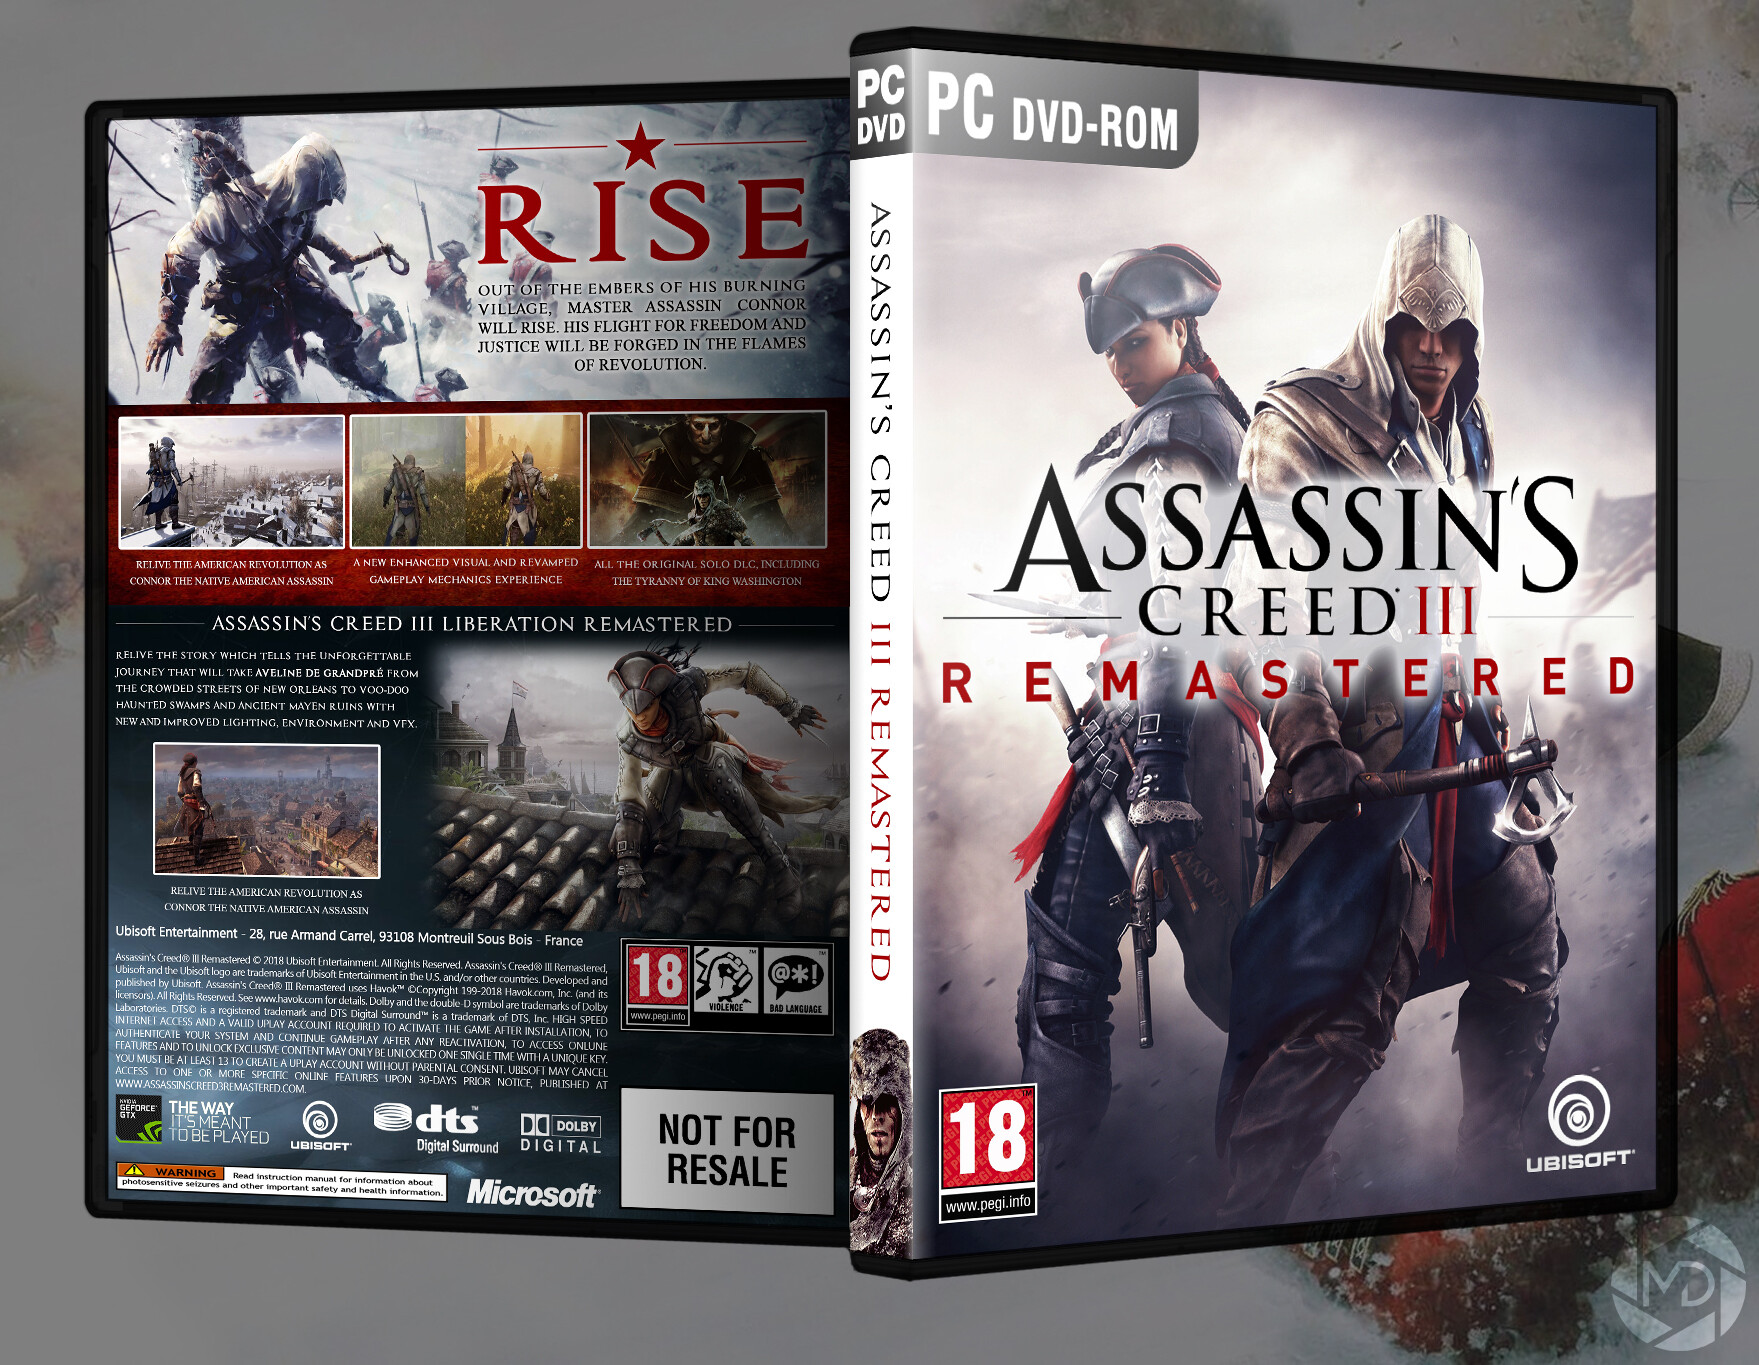 religion Forinden Ristede ArtStation - Assassin's Creed III Remastered (DVD Cover)